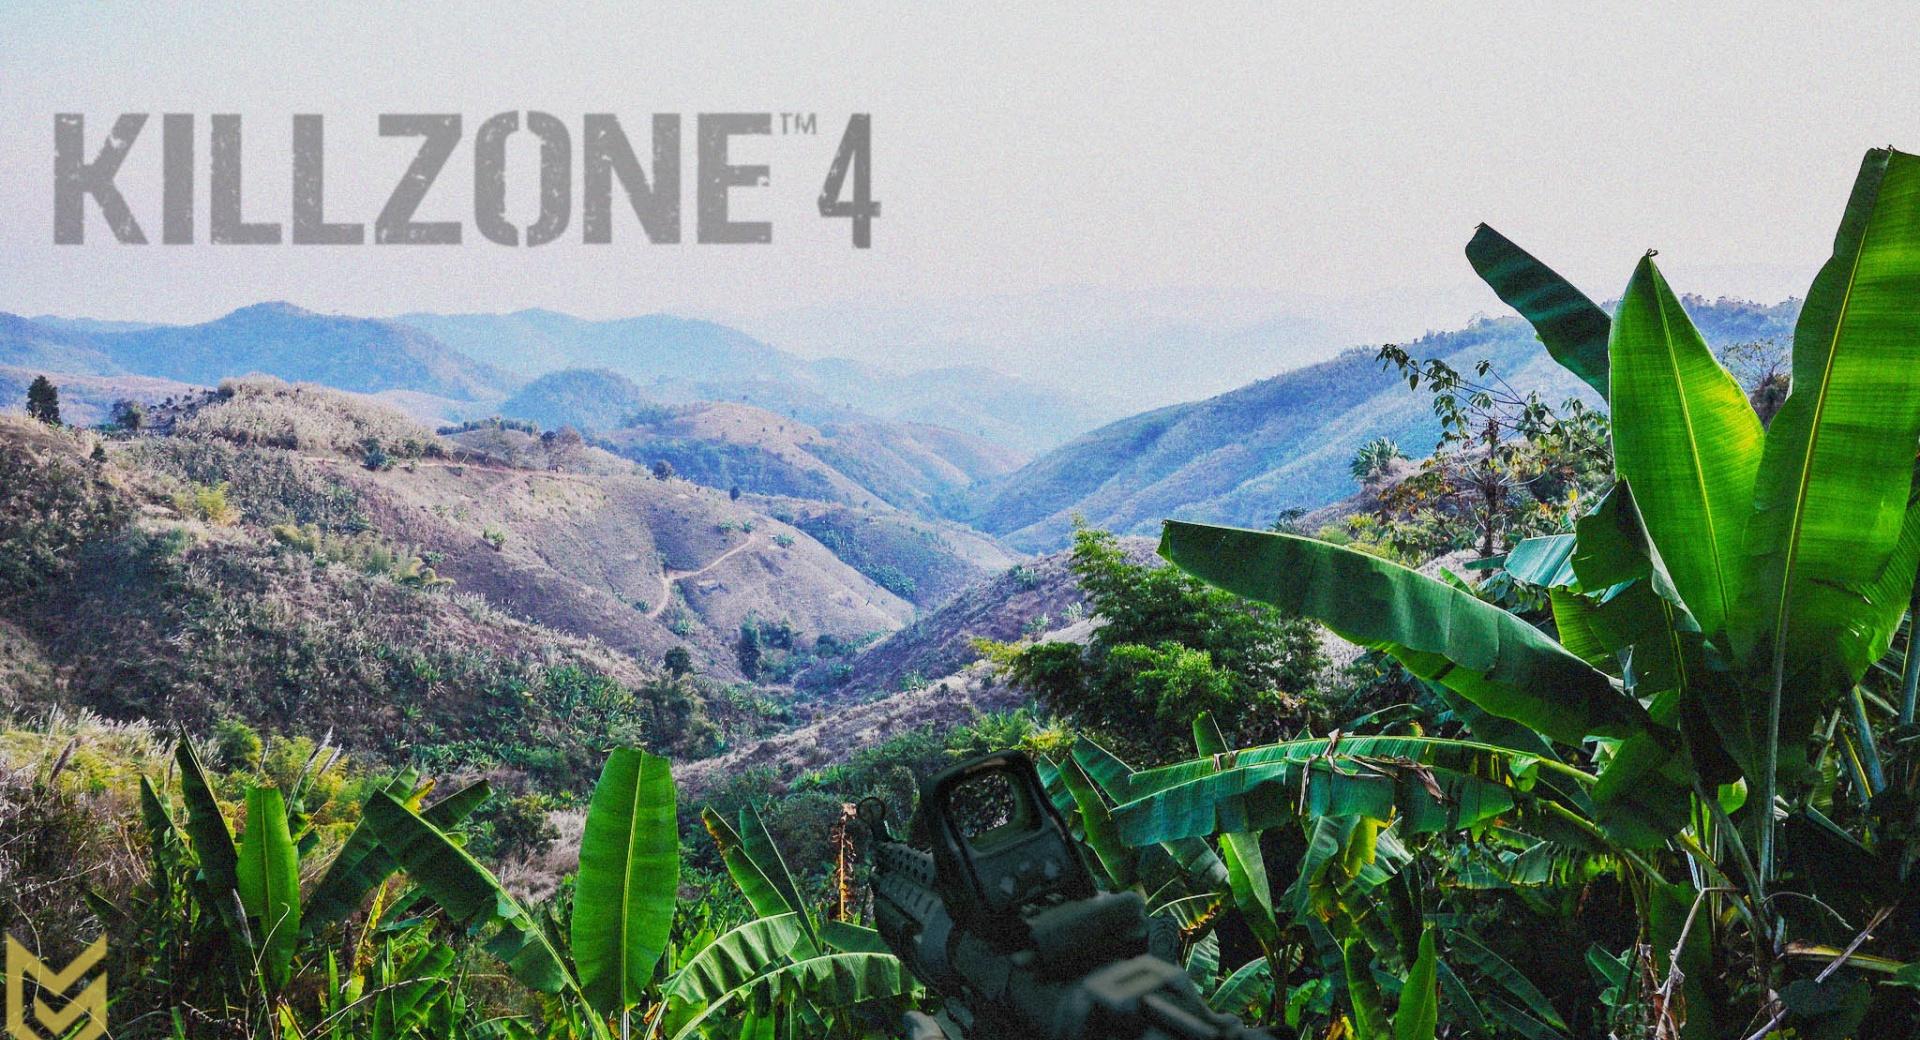 Killzone 4 Jungle at 2048 x 2048 iPad size wallpapers HD quality